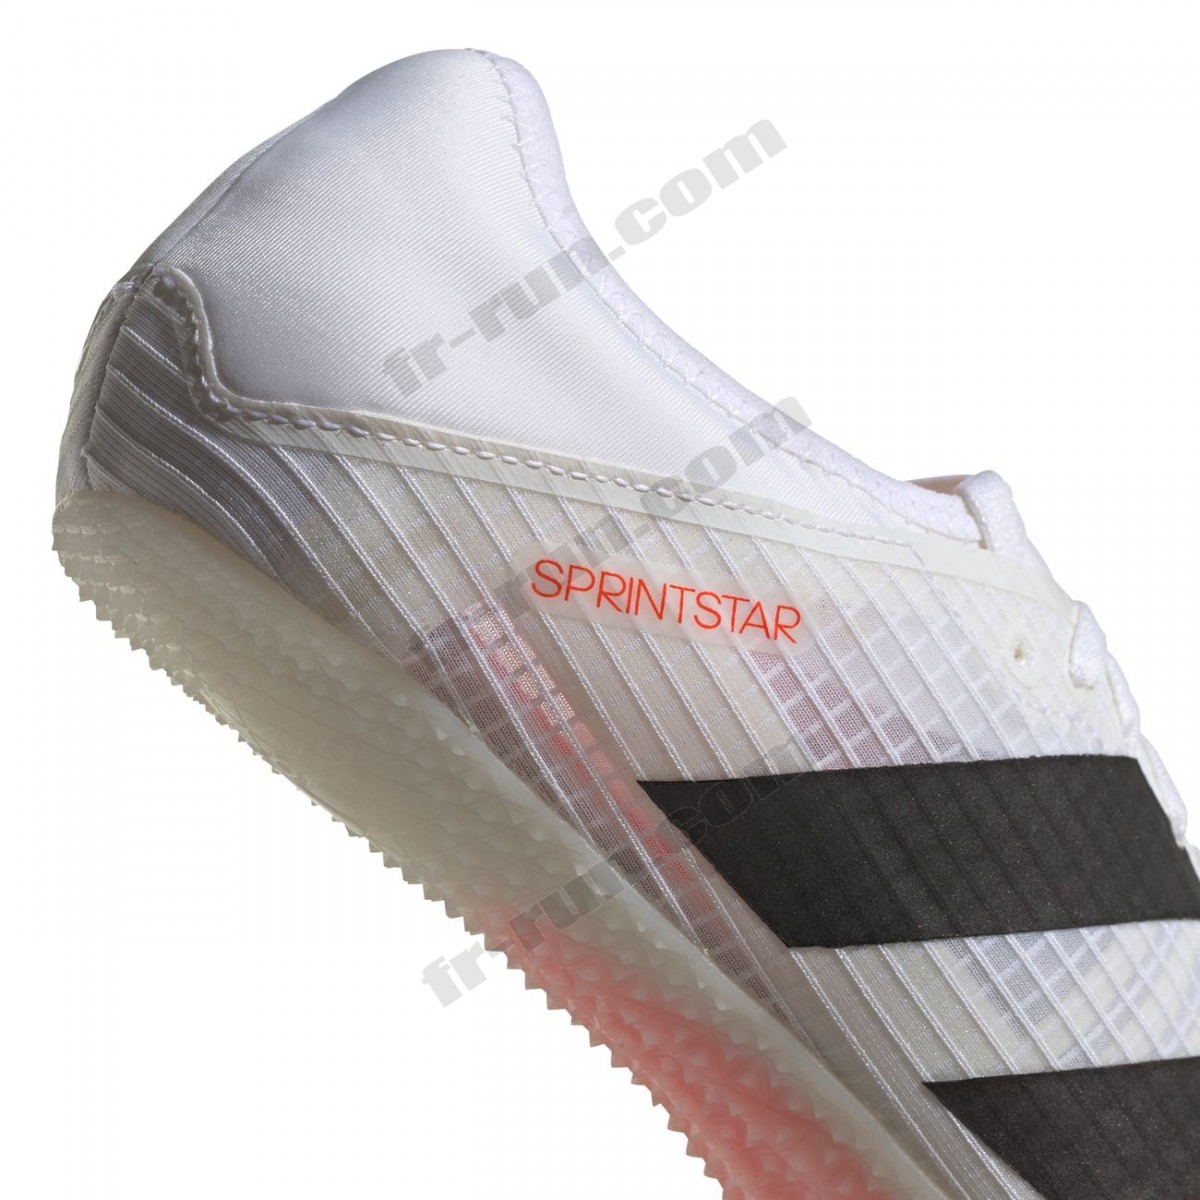 Adidas/Athlétisme homme ADIDAS Chaussures adidas Sprintstar Tokyo √ Nouveau style √ Soldes - -5